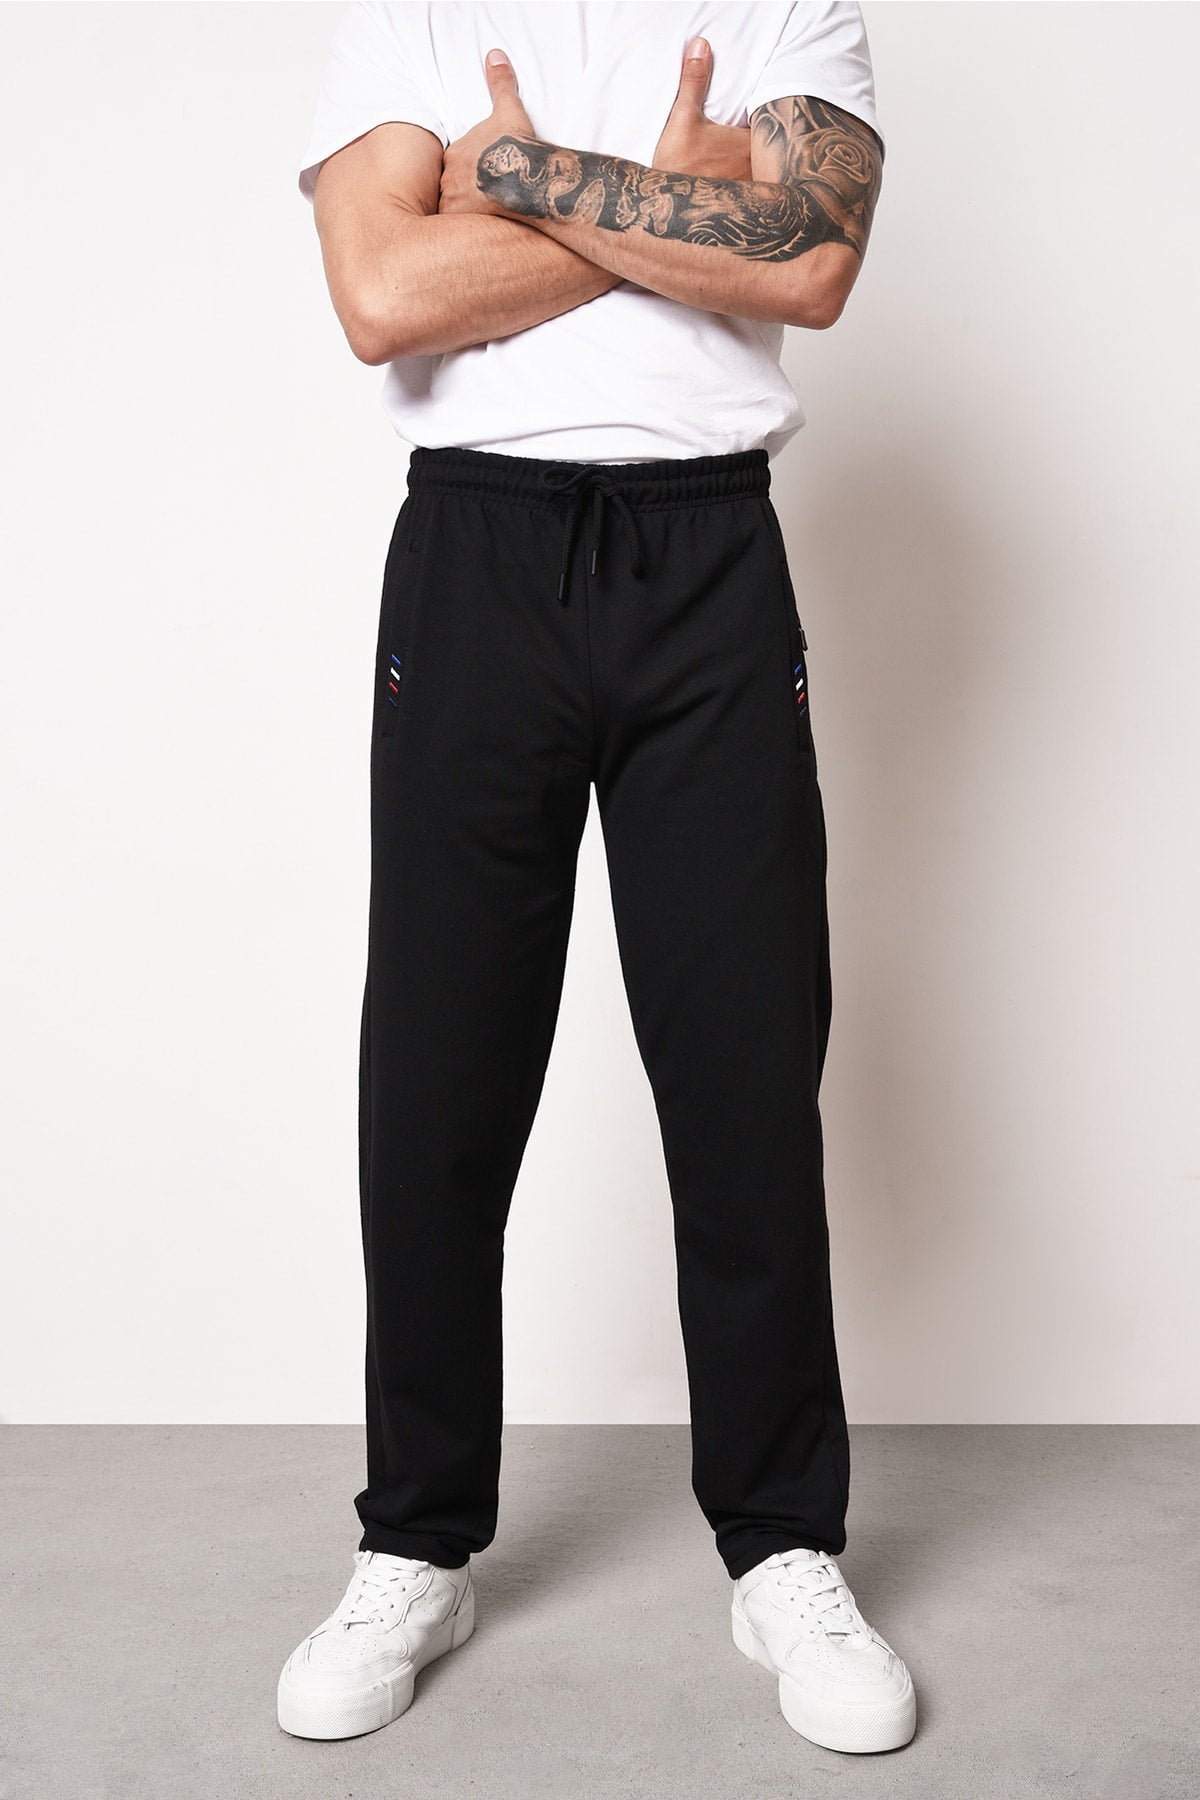 Mtlc045 Black Men's Zipper Pocket Embroidery Detail Straight Leg Casual Fit Sweatpants